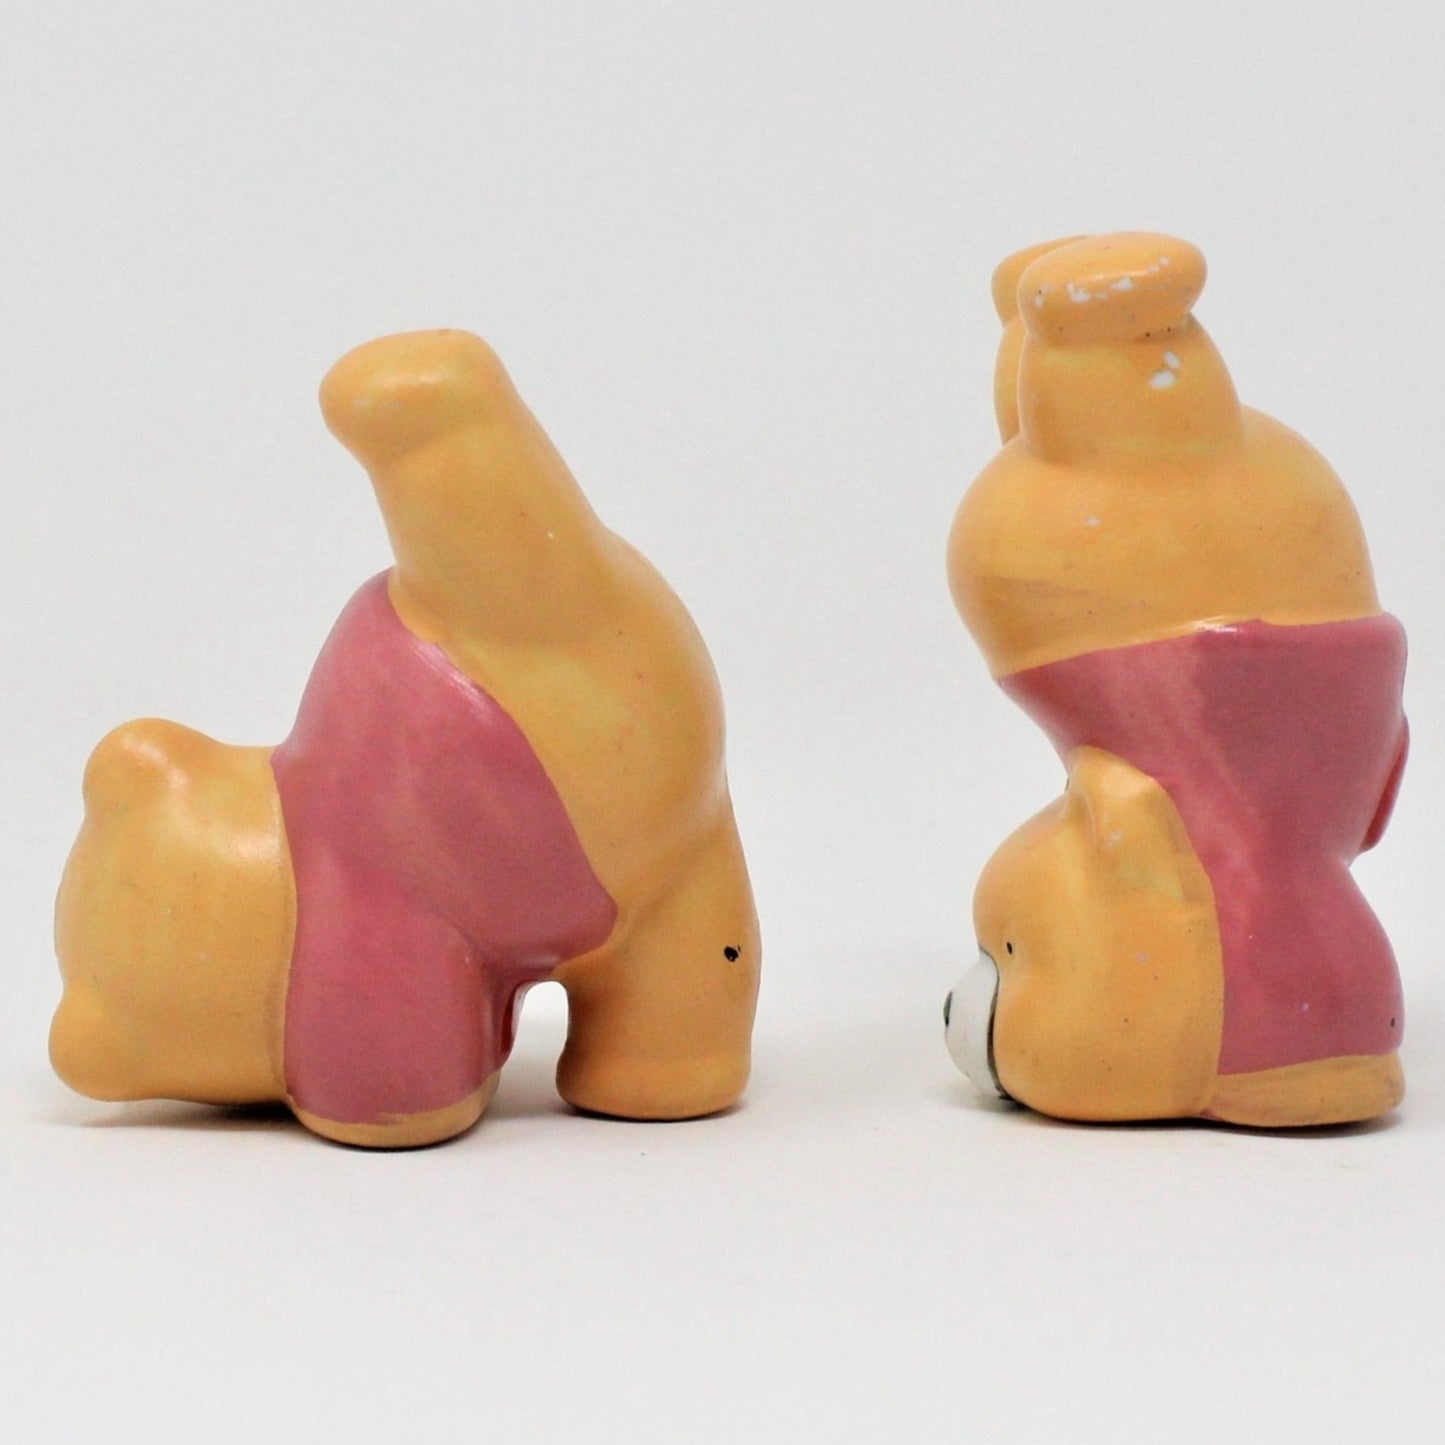 Figurine, Tumbling Yoga Bears with Hearts, Set of 2 Porcelain, Vintage